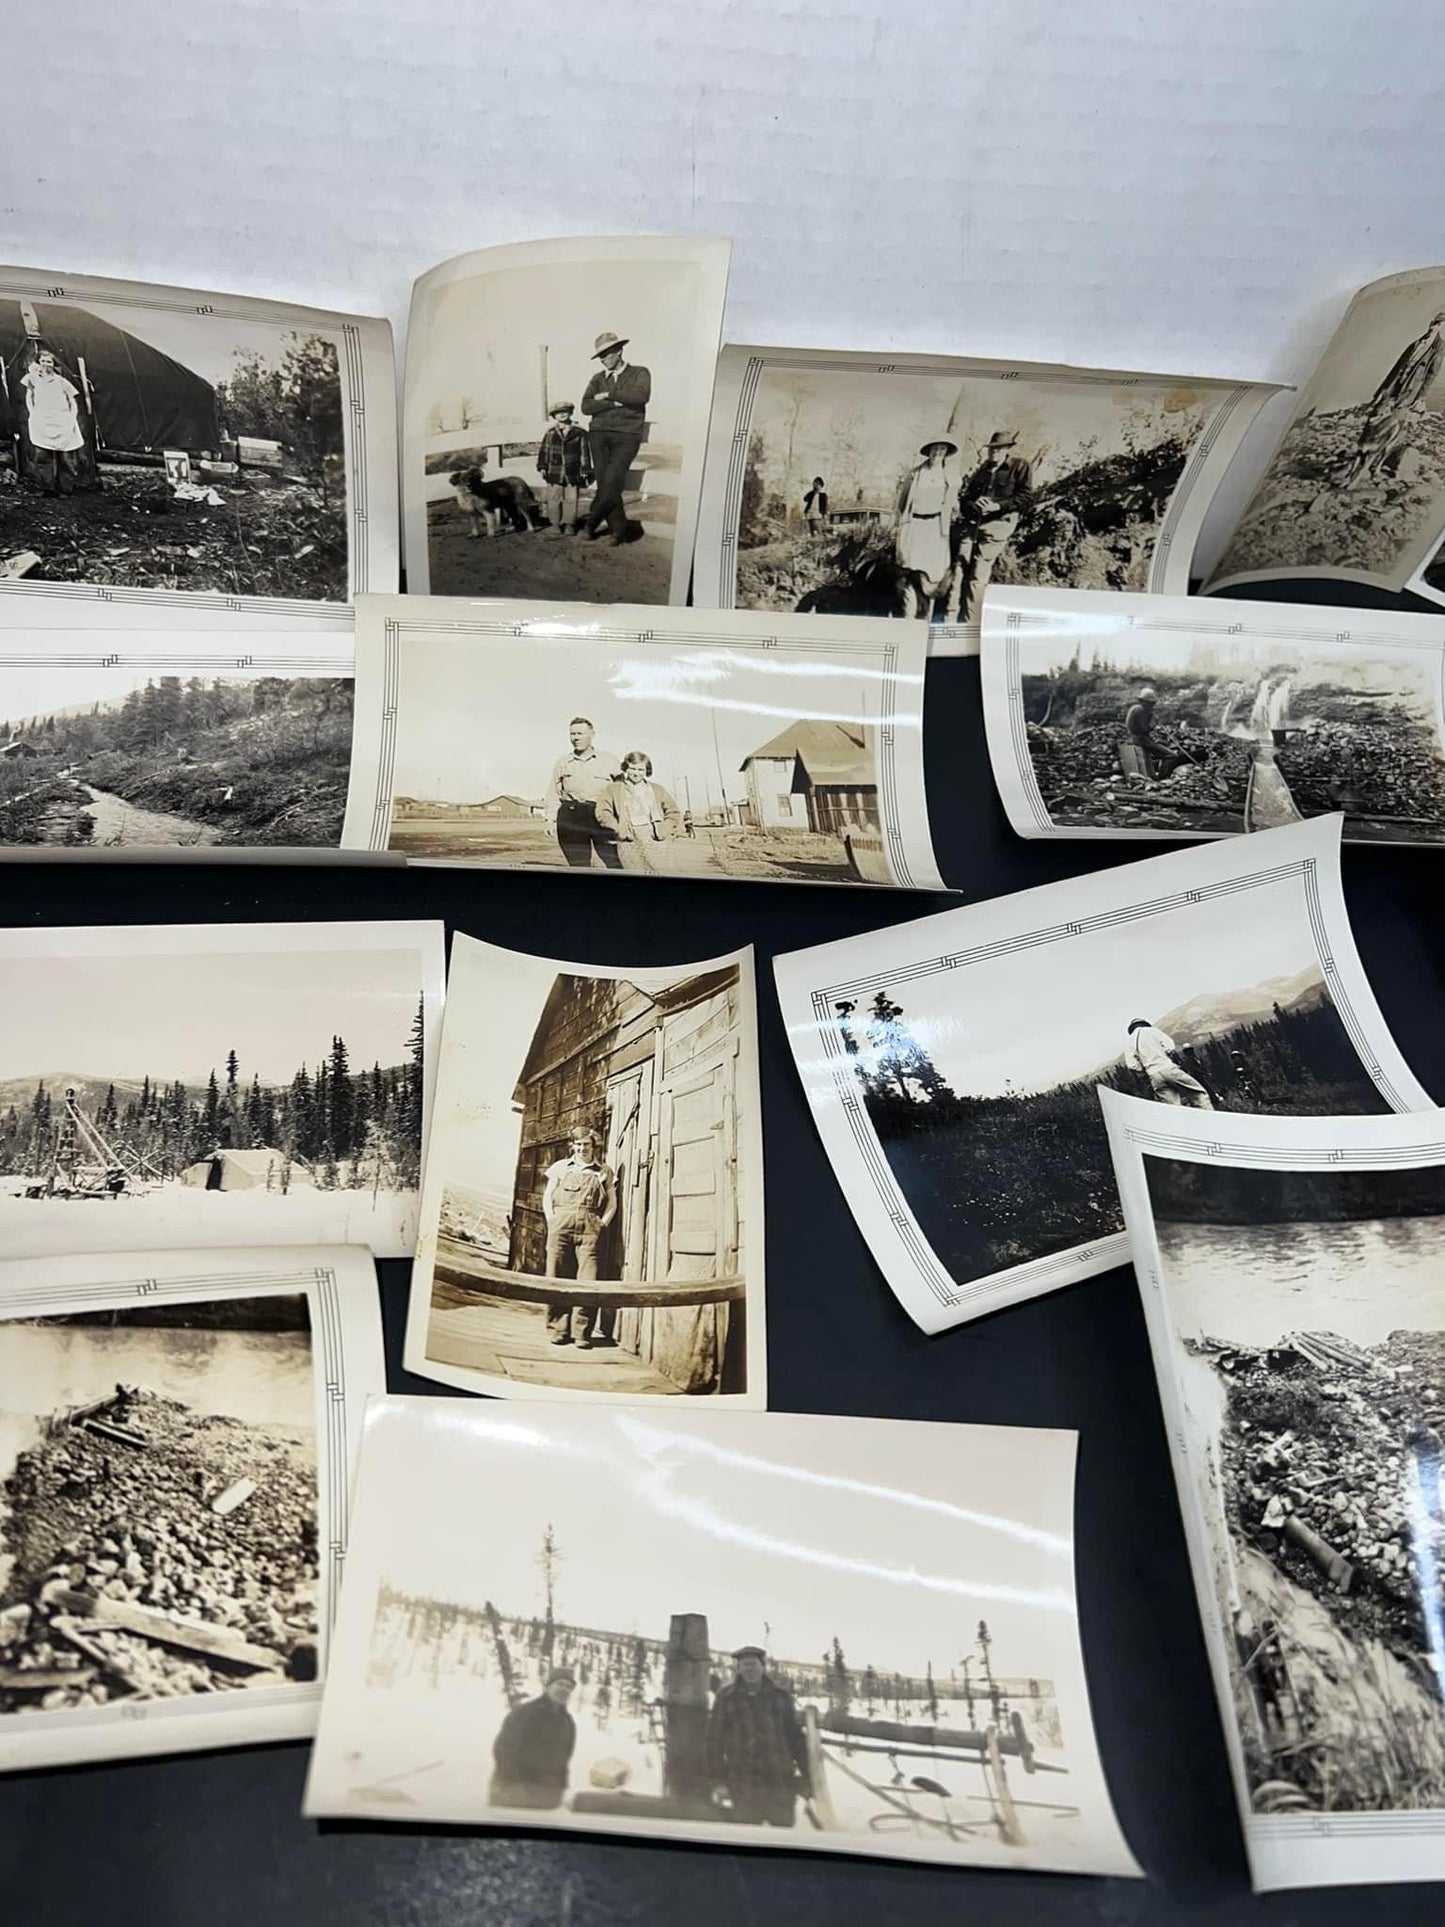 Vintage photos snapshots Early Alaska 1936-1937 mining idd occupational